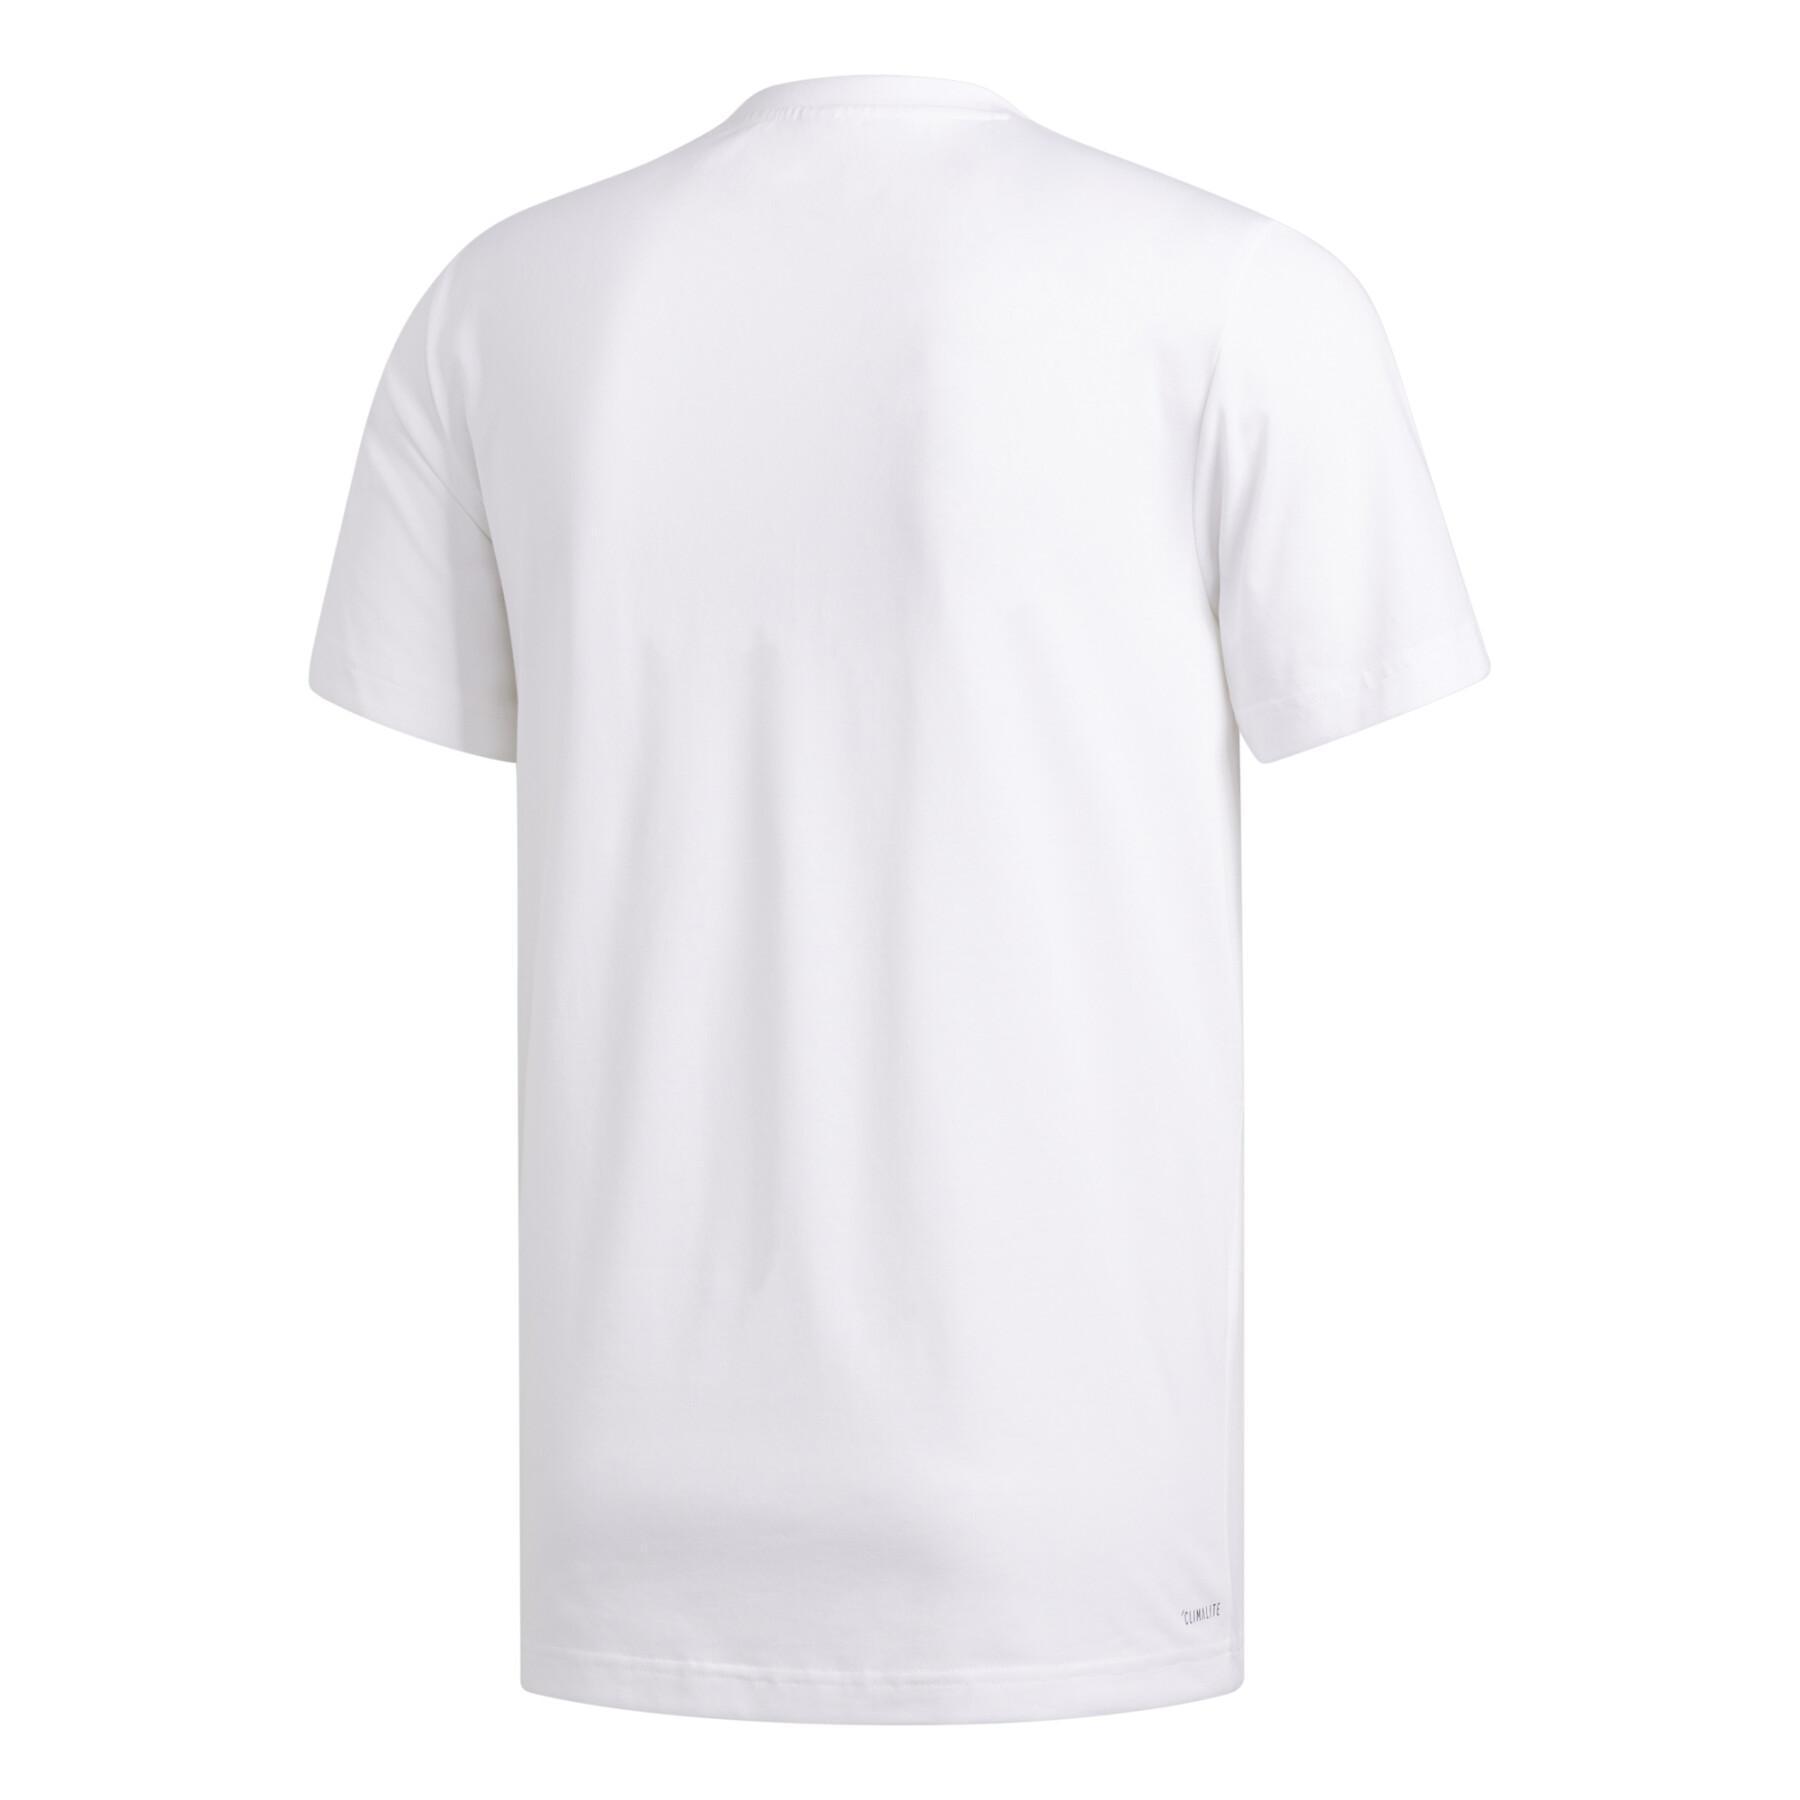 Koszulka adidas Donovan Mitchell Logo